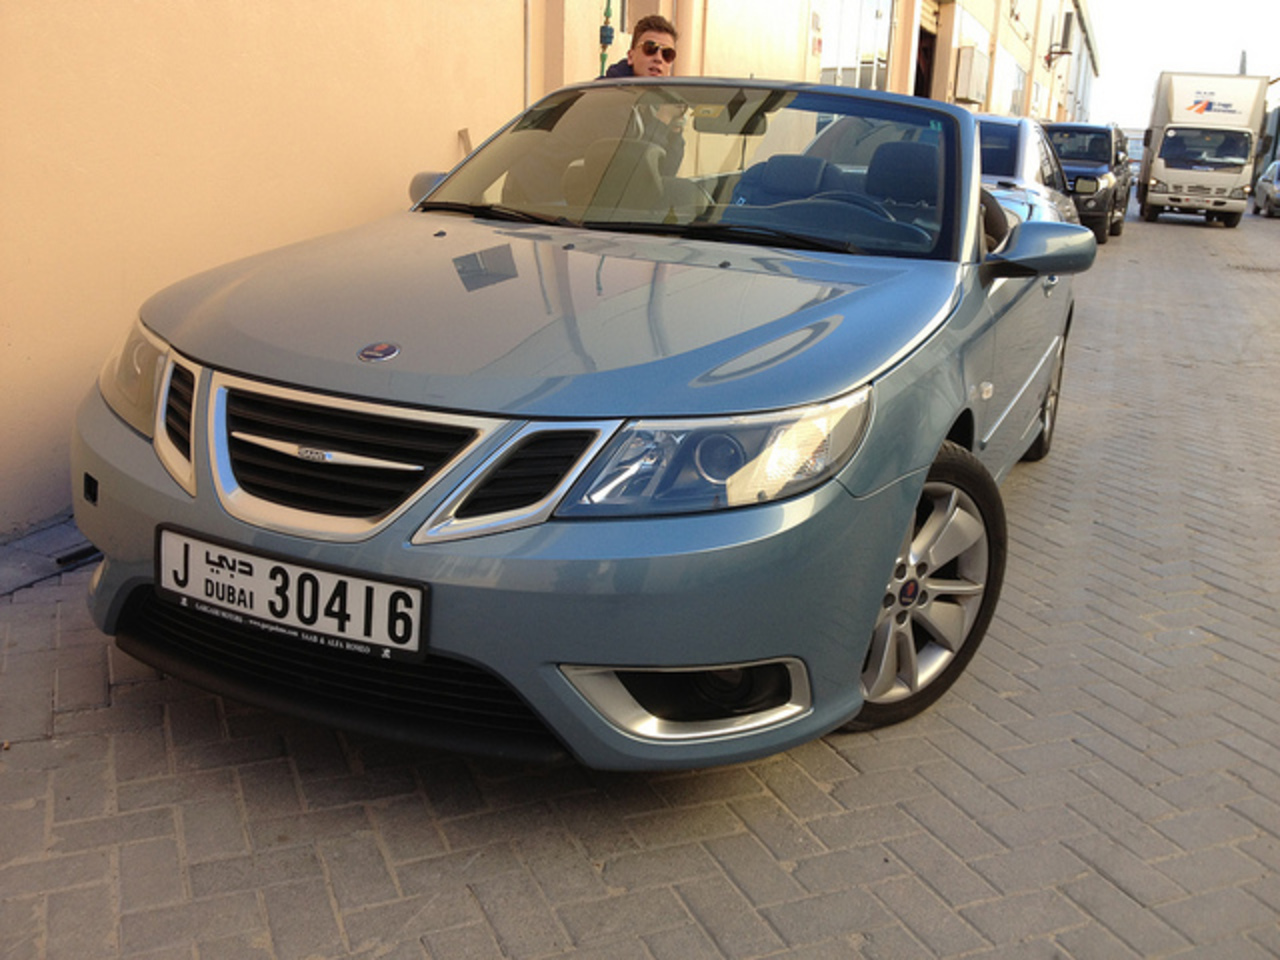 Flickr: The Saab convertible Pool